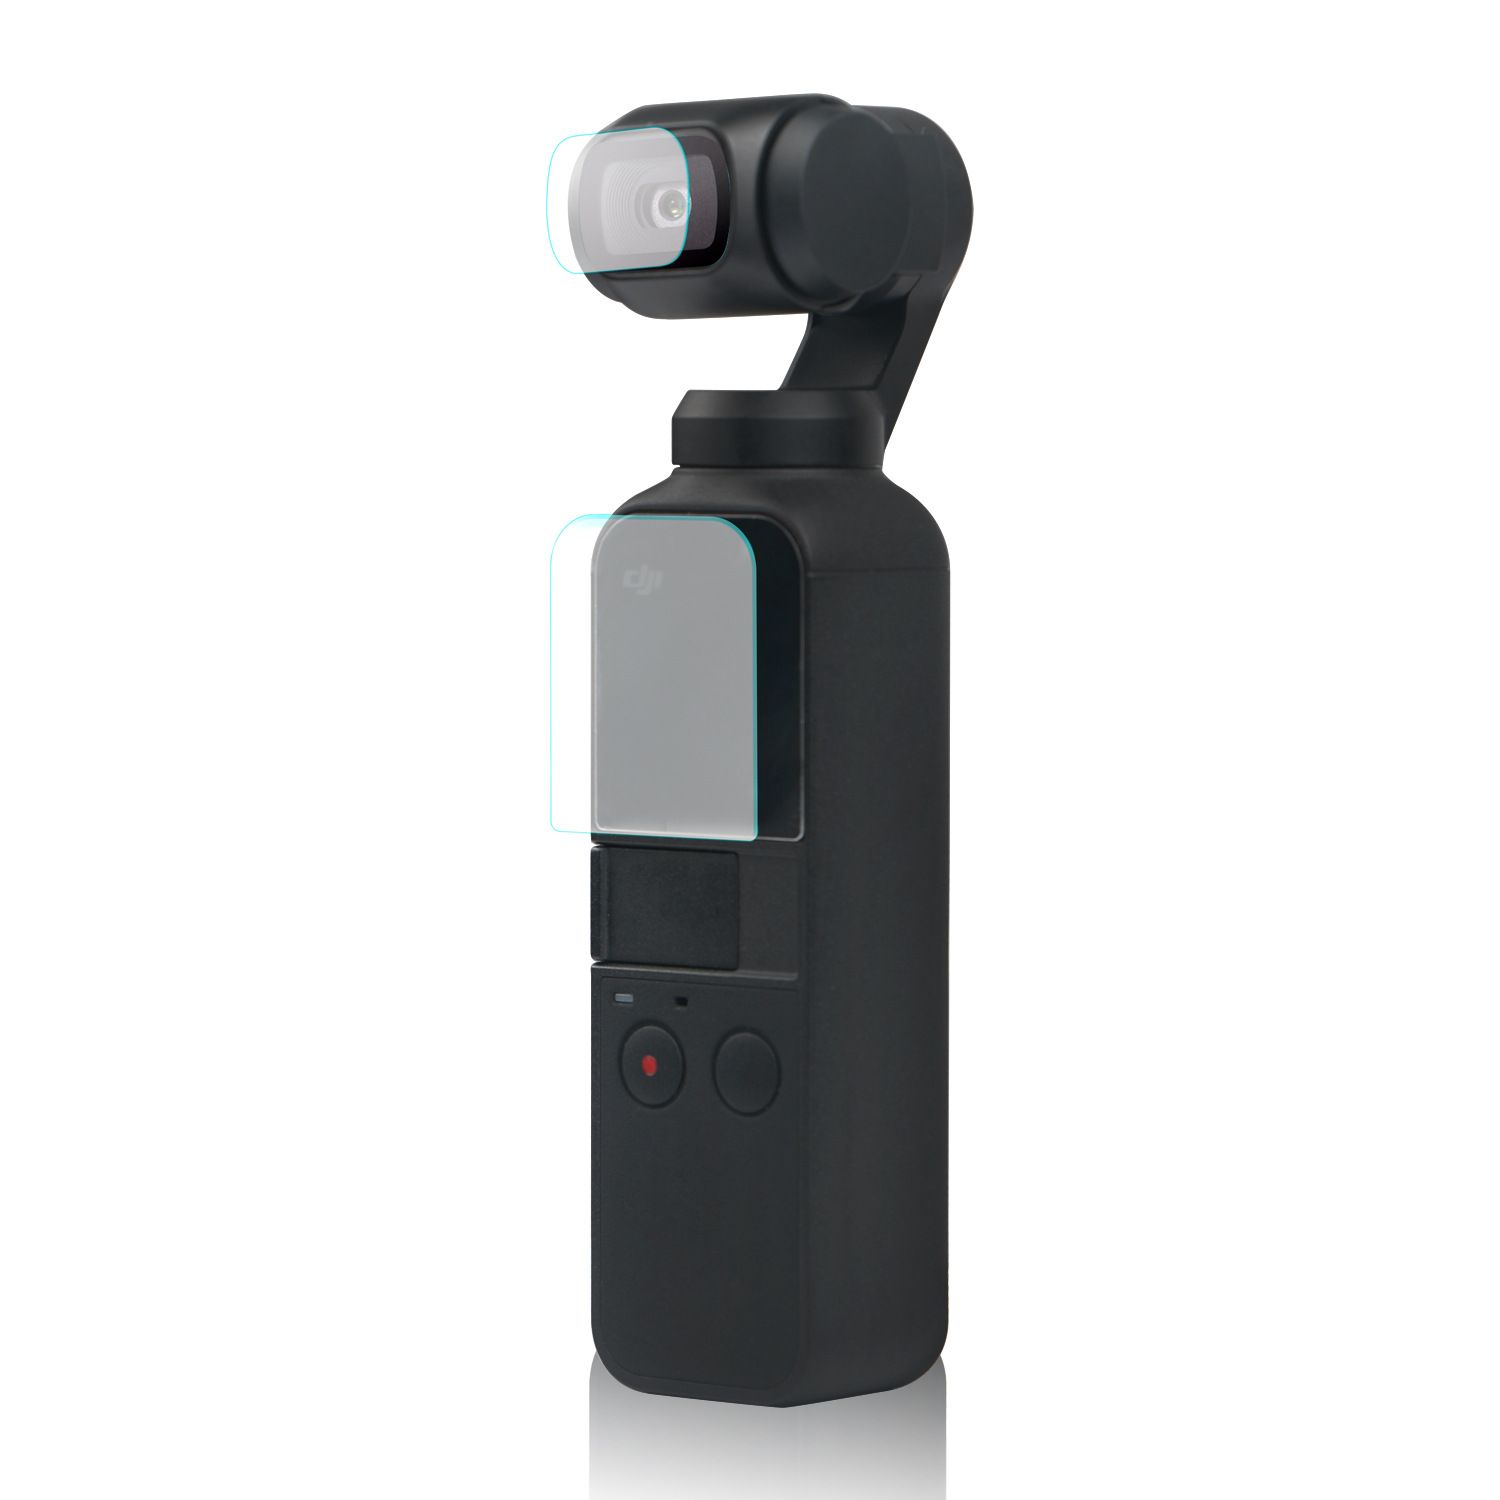 SheIngKa-Lens-Screen-Protective-Protector-Film-for-DJI-OSMO-Pocket-Action-Gimbal-Camera-1531897